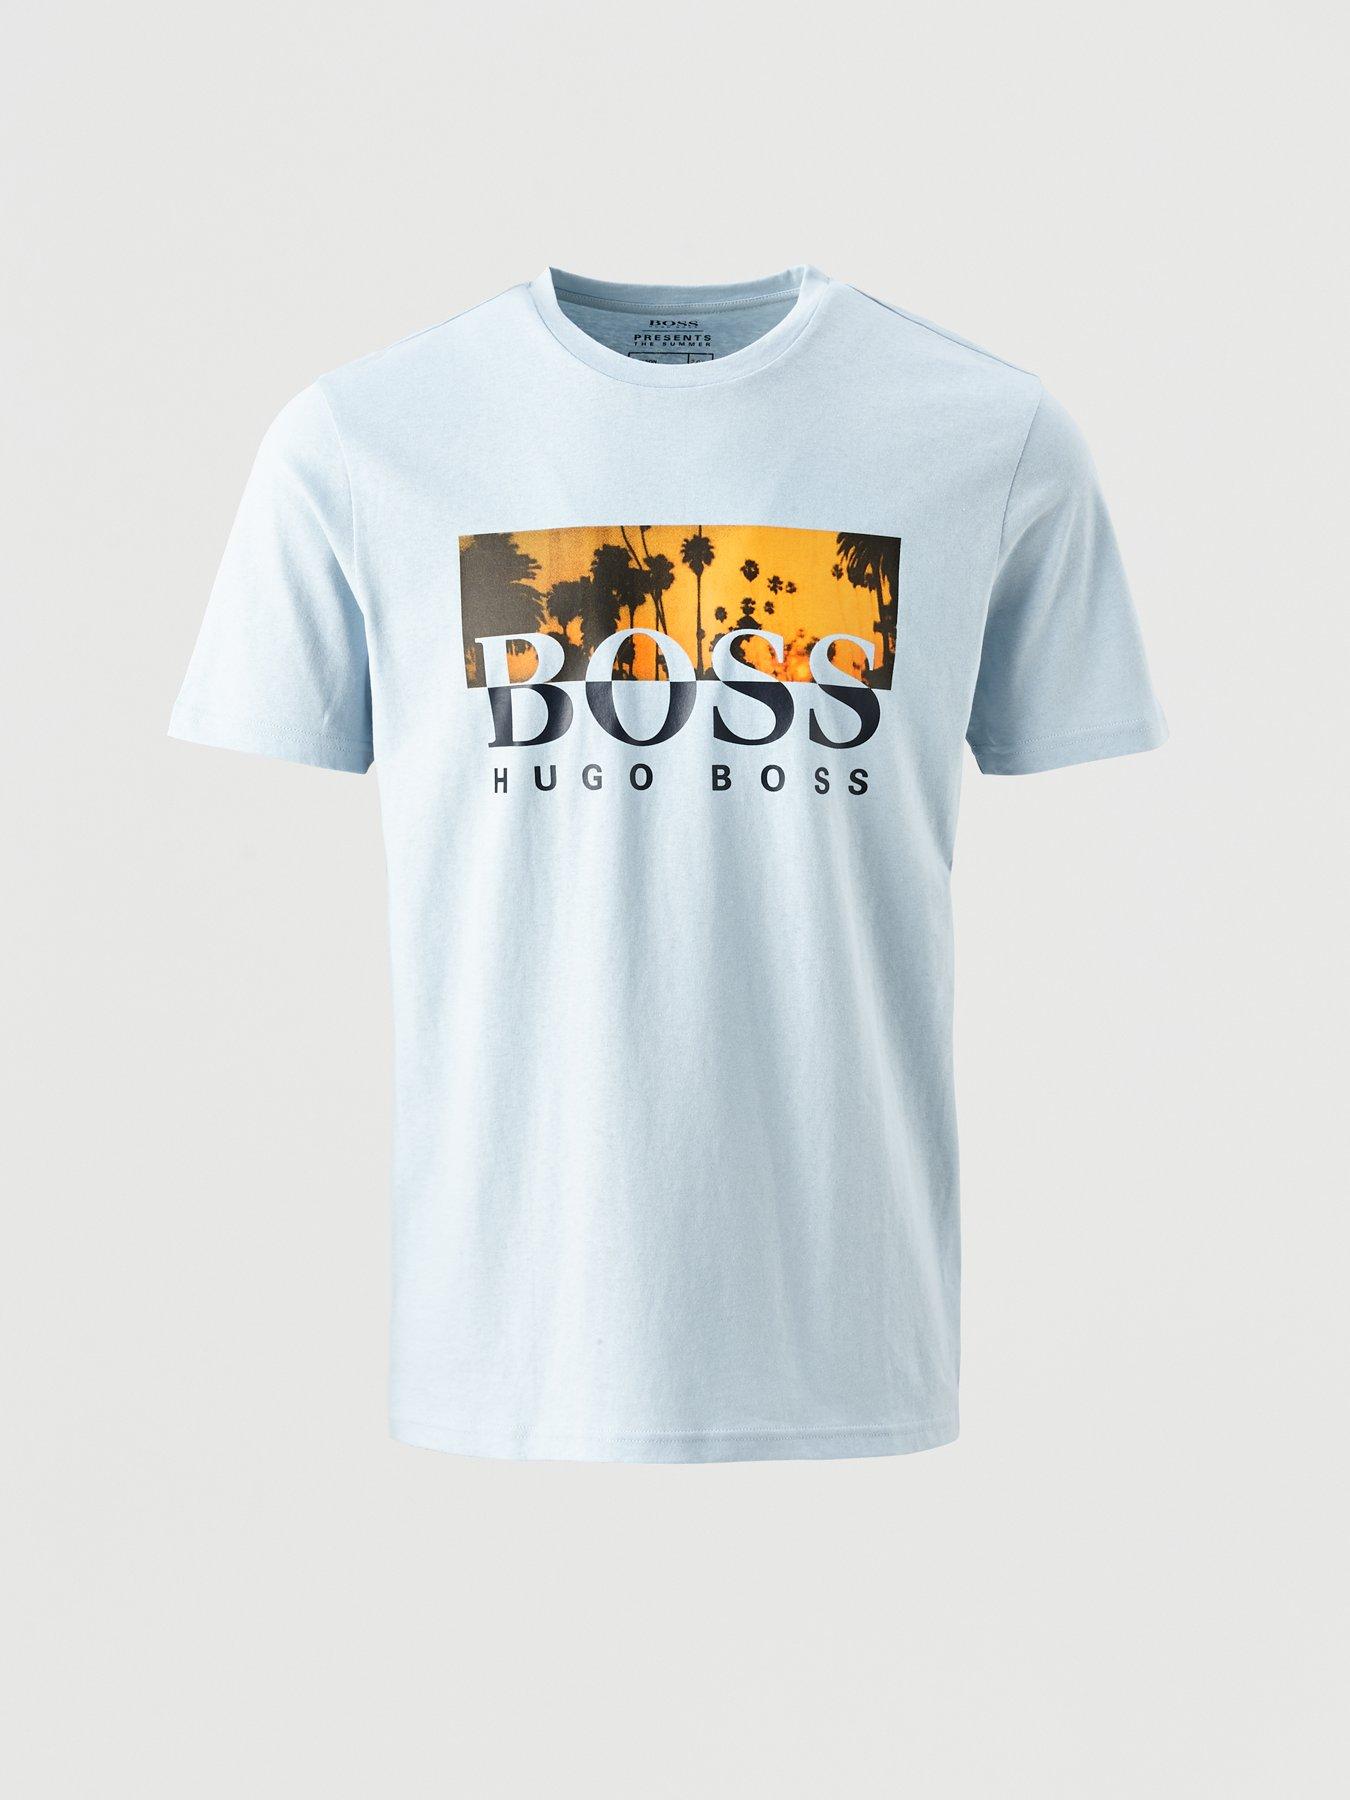 boss core t shirt